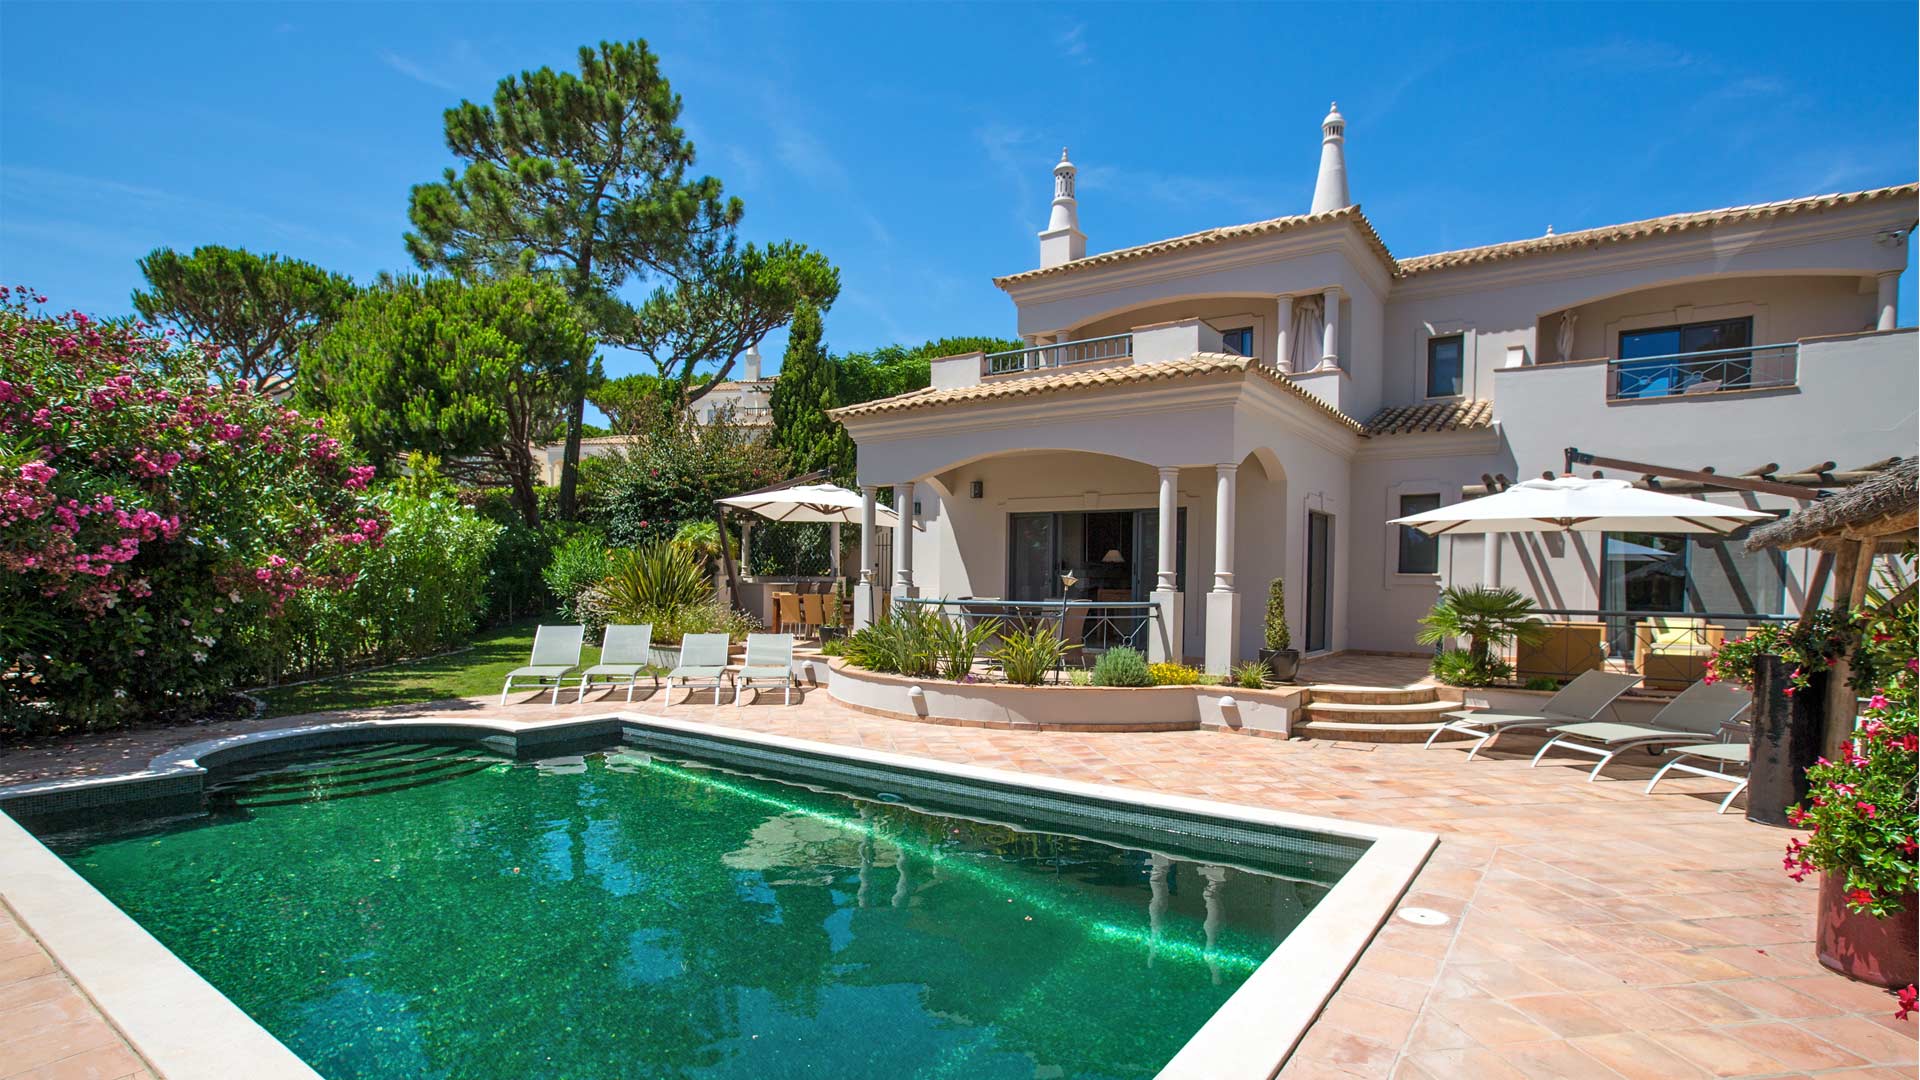 Luxury villa rentals Vale do Lobo Algarve Portugal: the TOP